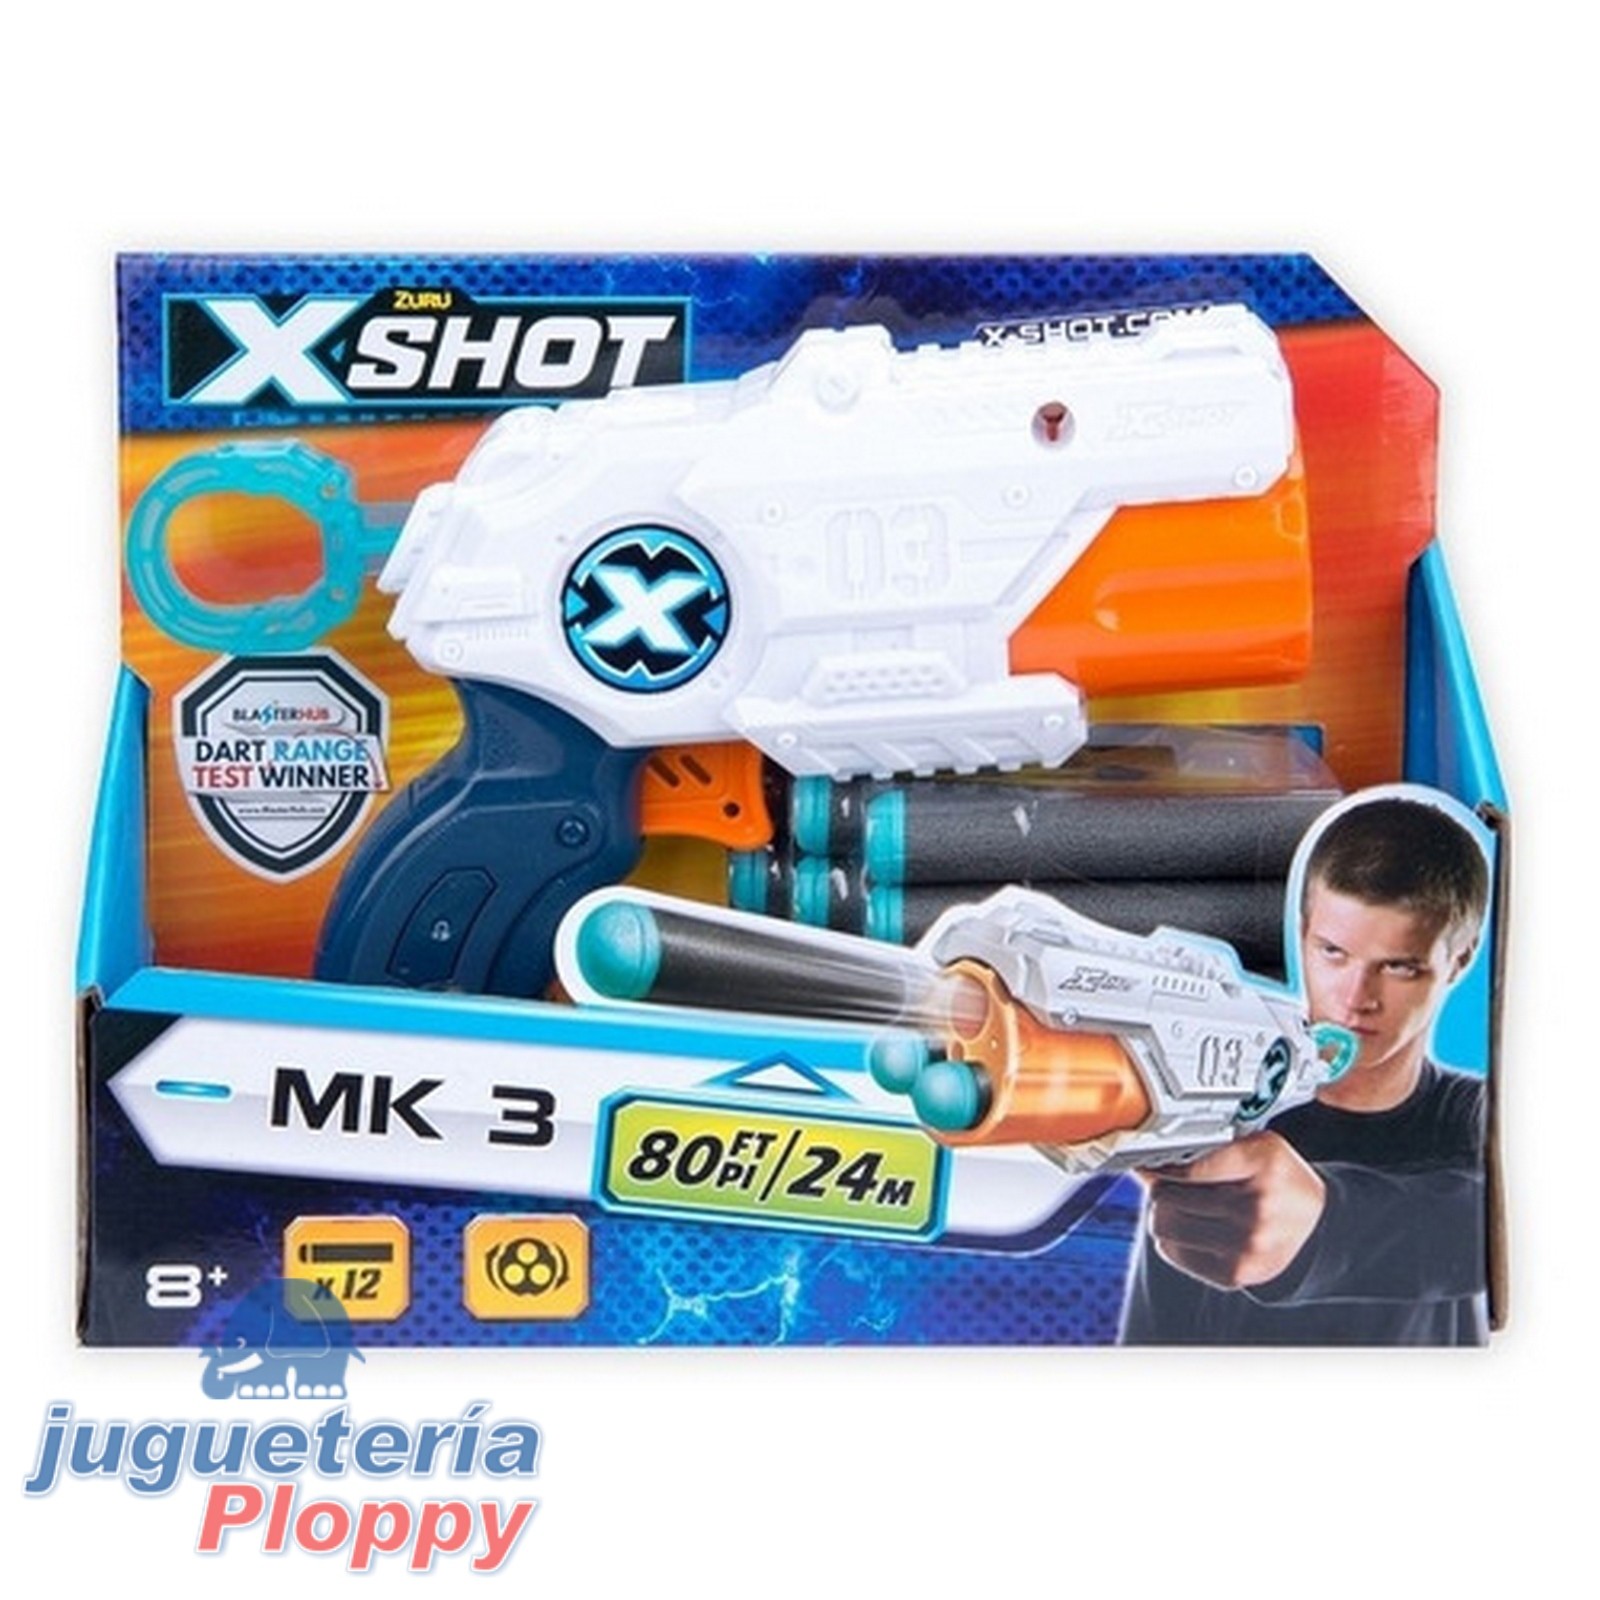 Pistola de juguete X-Shot 12 pelotas